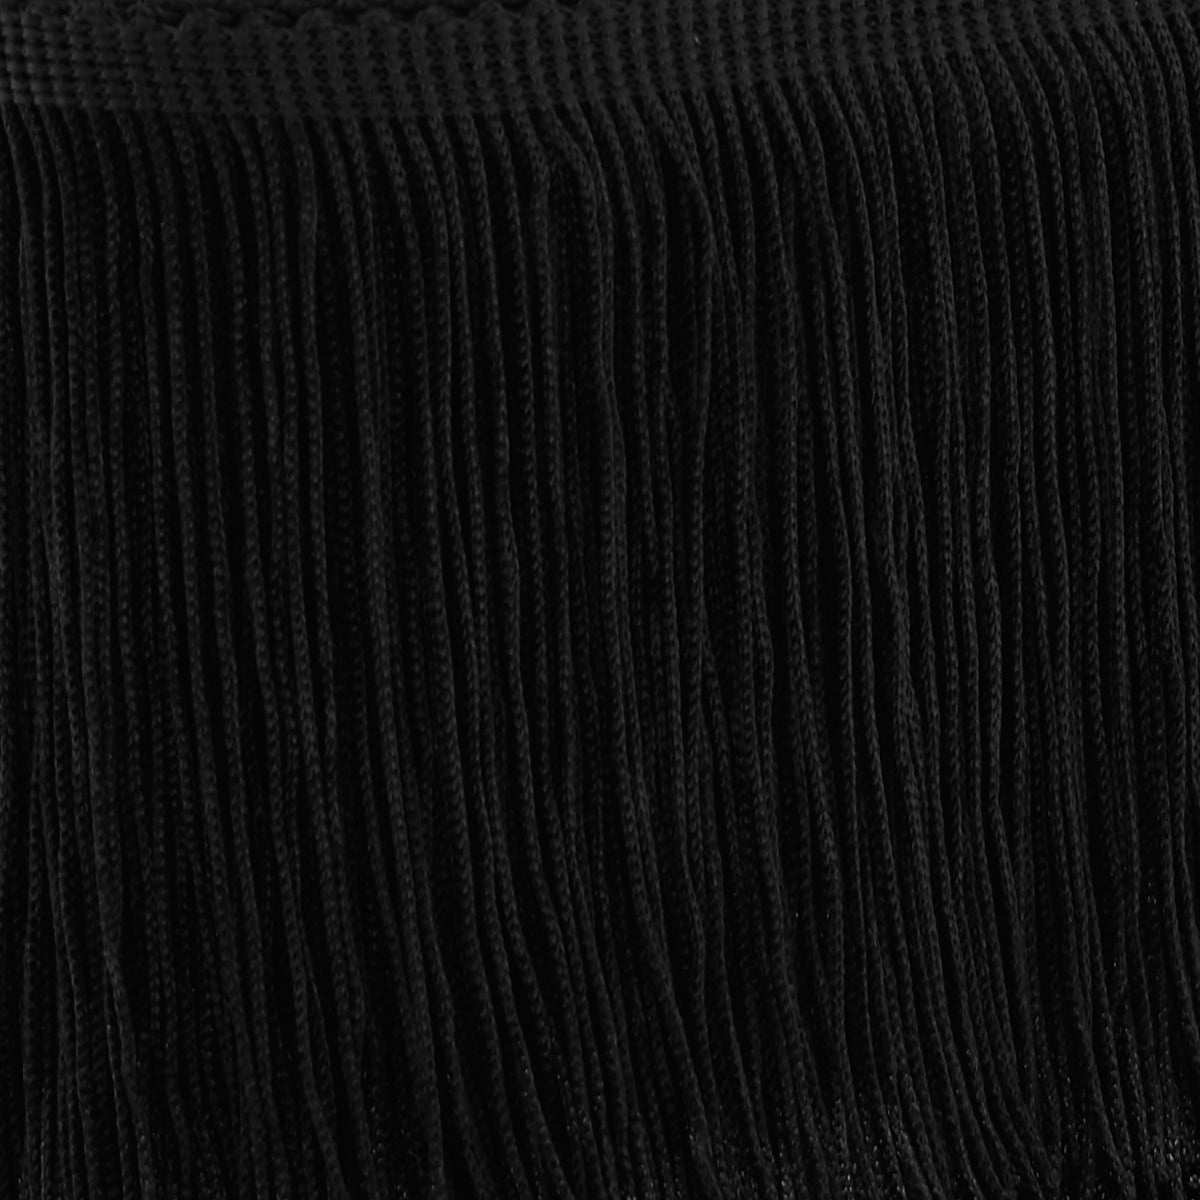 Fringe - Black (detail)